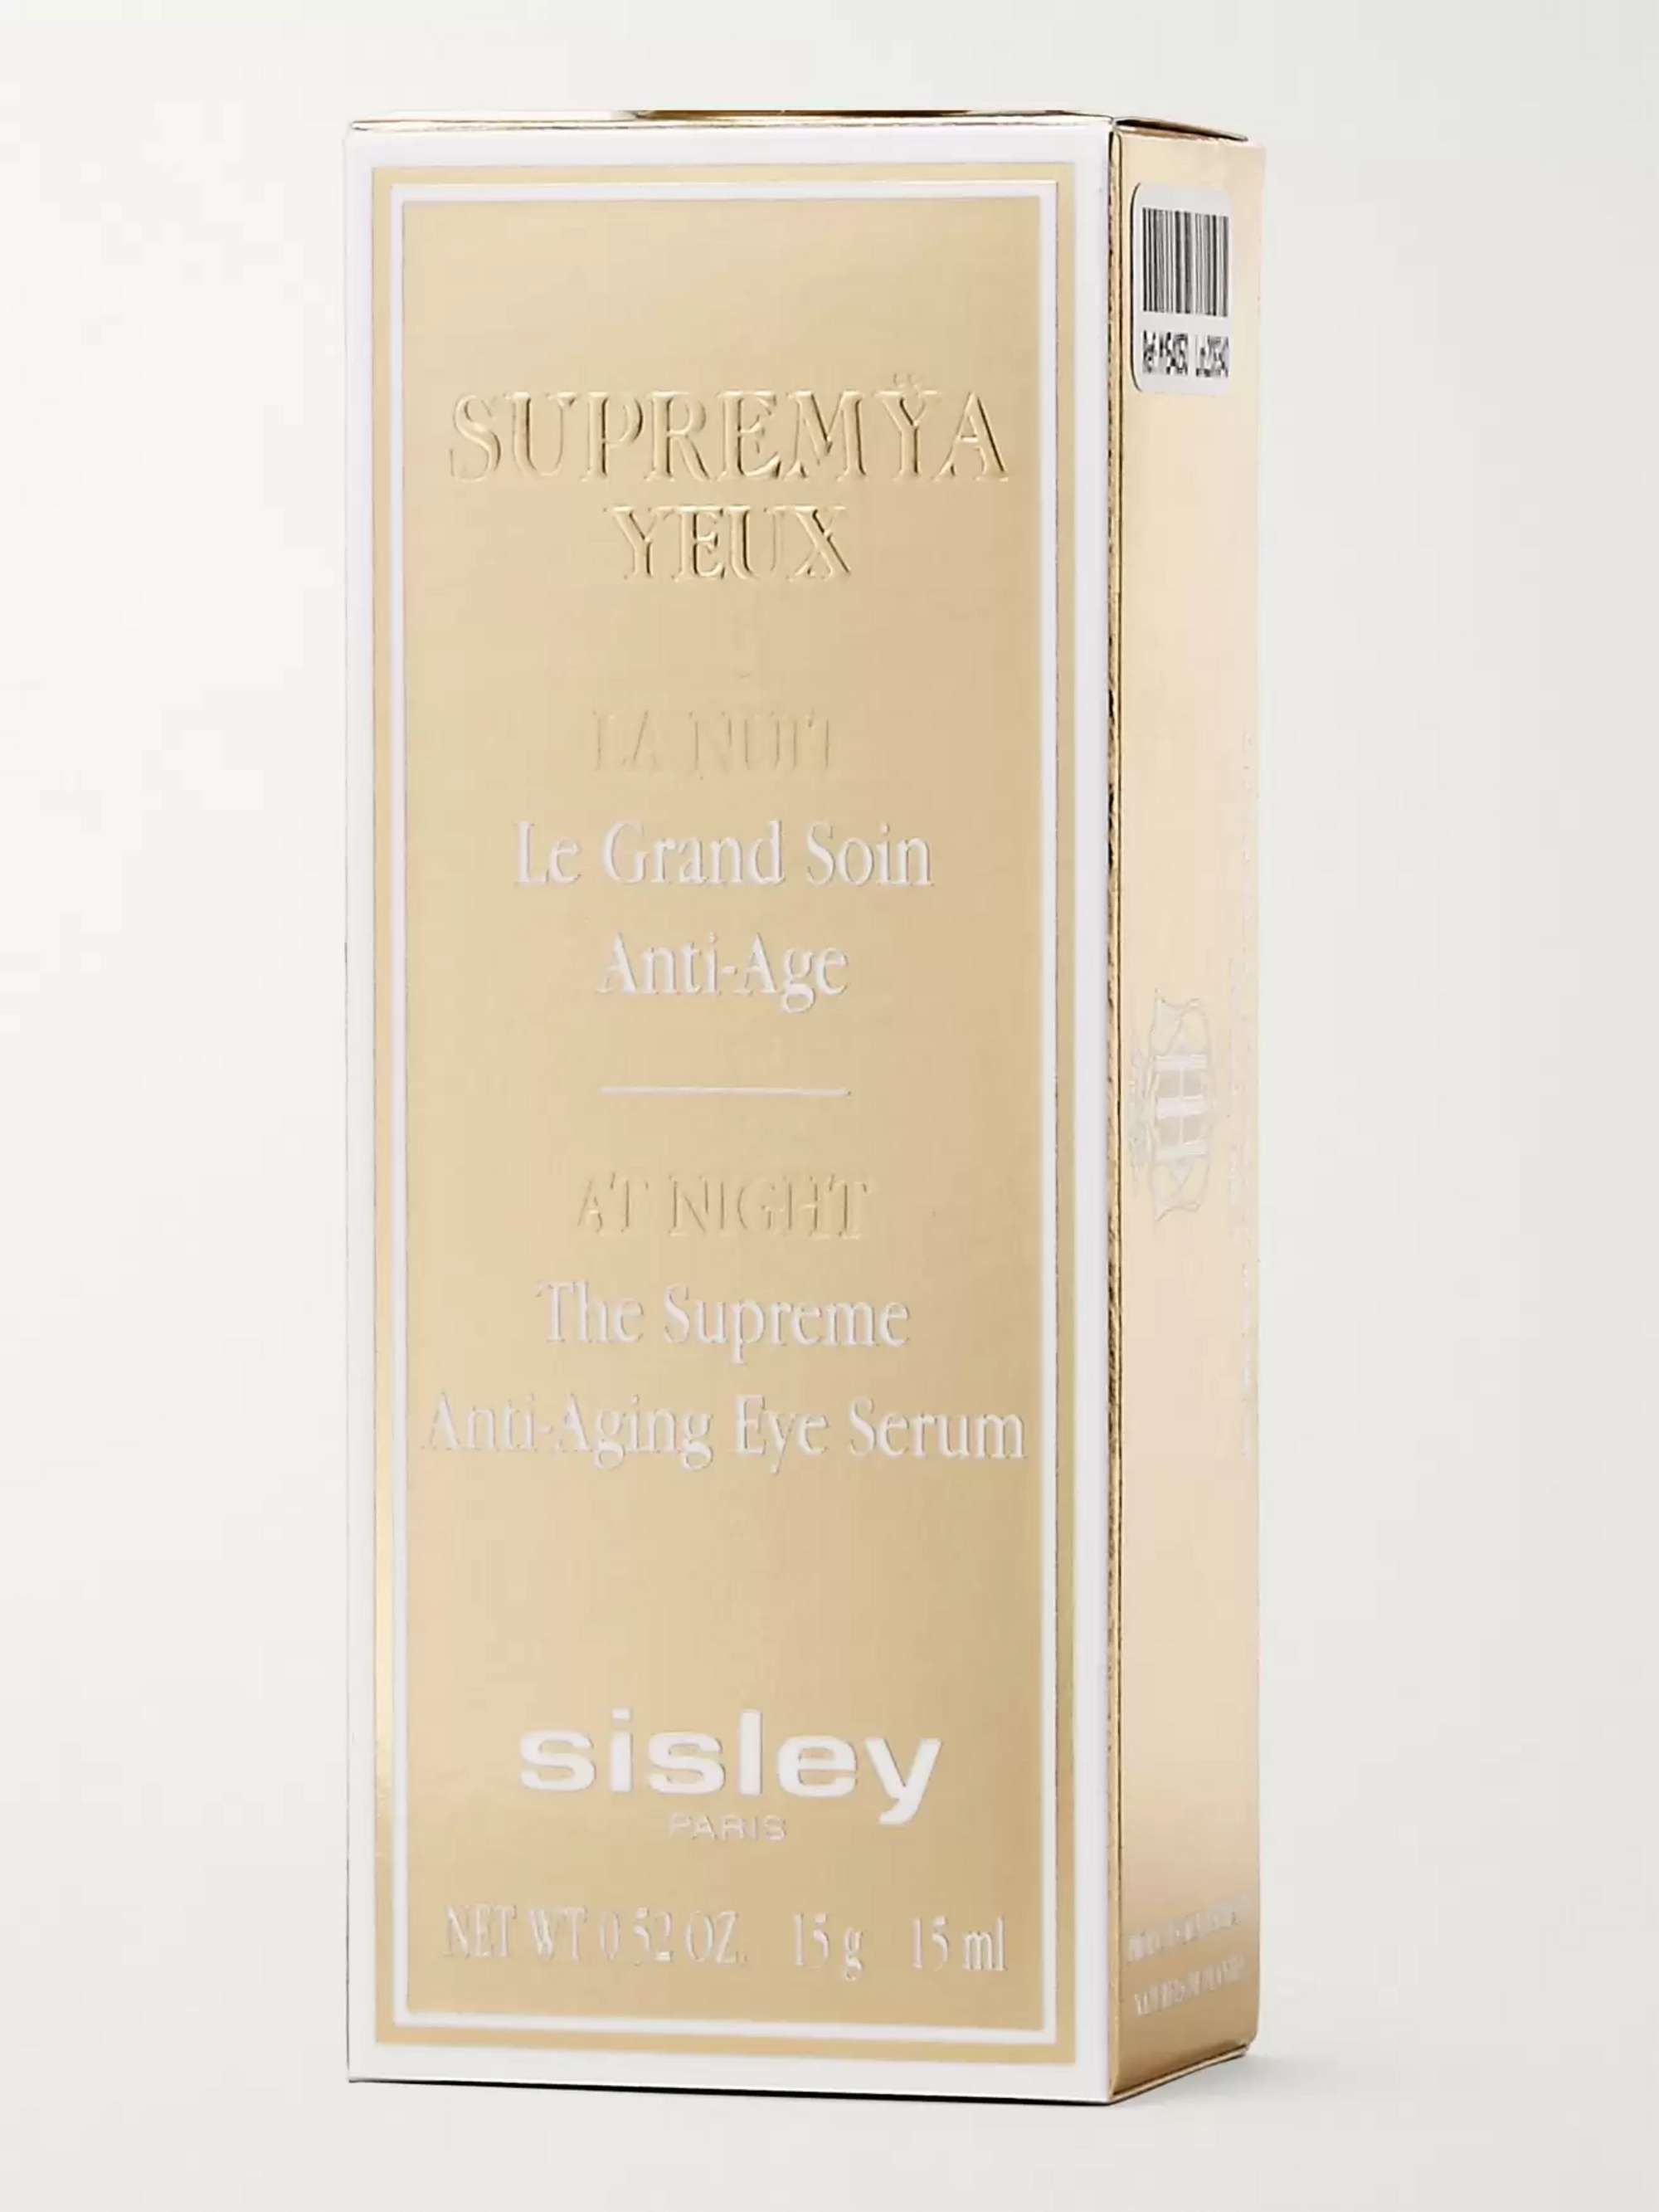 SISLEY Supremya At Night - The Supreme Anti-Aging Skin Care, 50ml